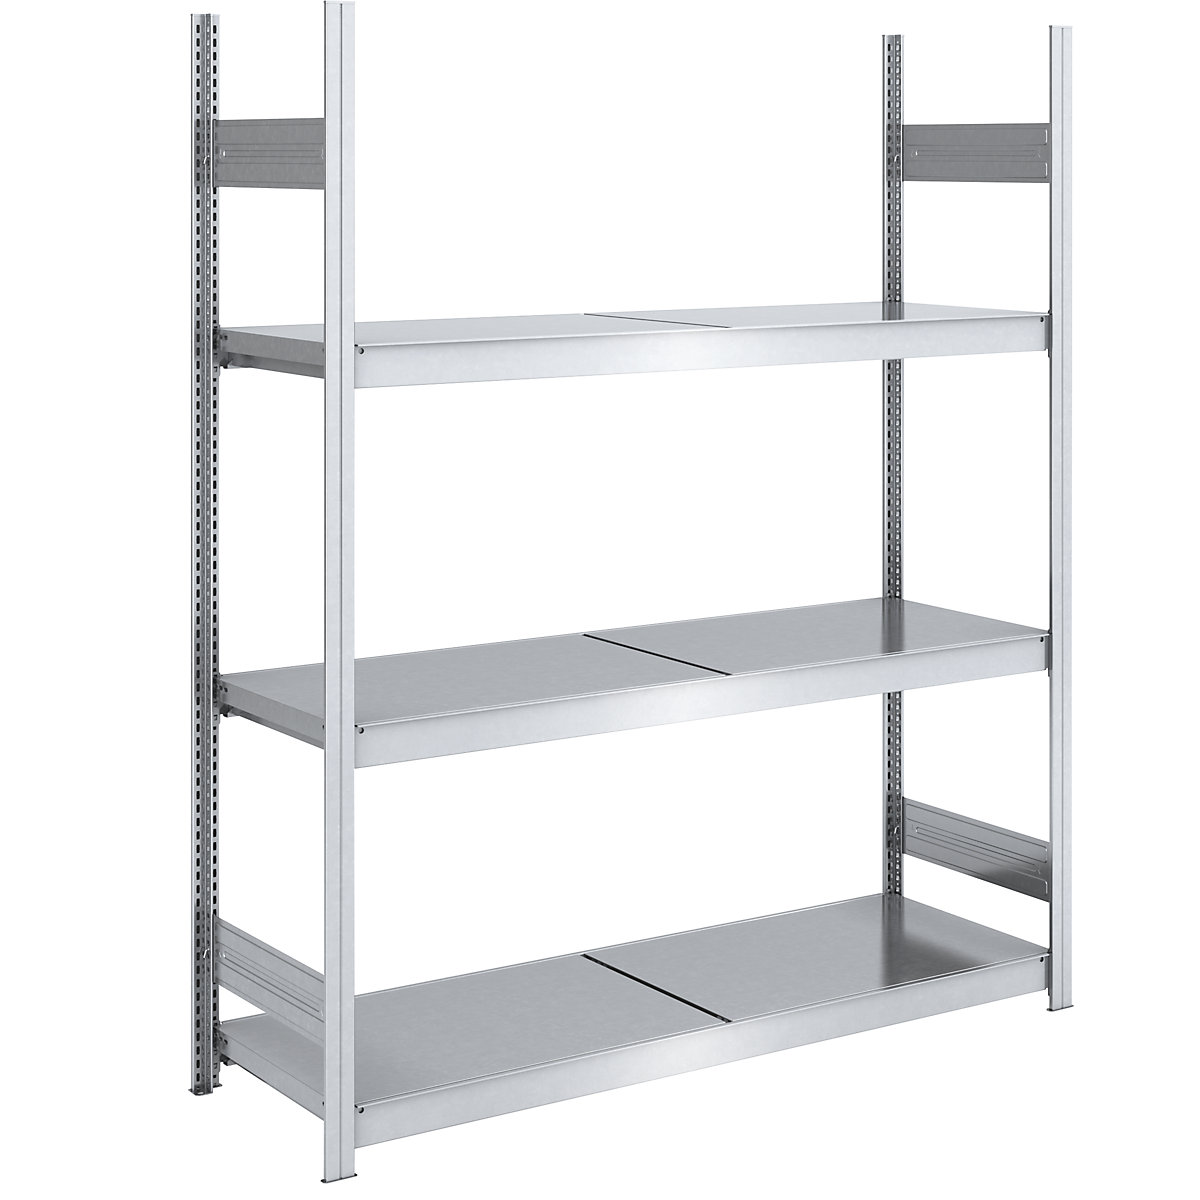 Wide span boltless shelving unit with steel shelves – hofe, height 2000 mm, shelf width 1500 mm, shelf depth 600 mm, standard shelf unit